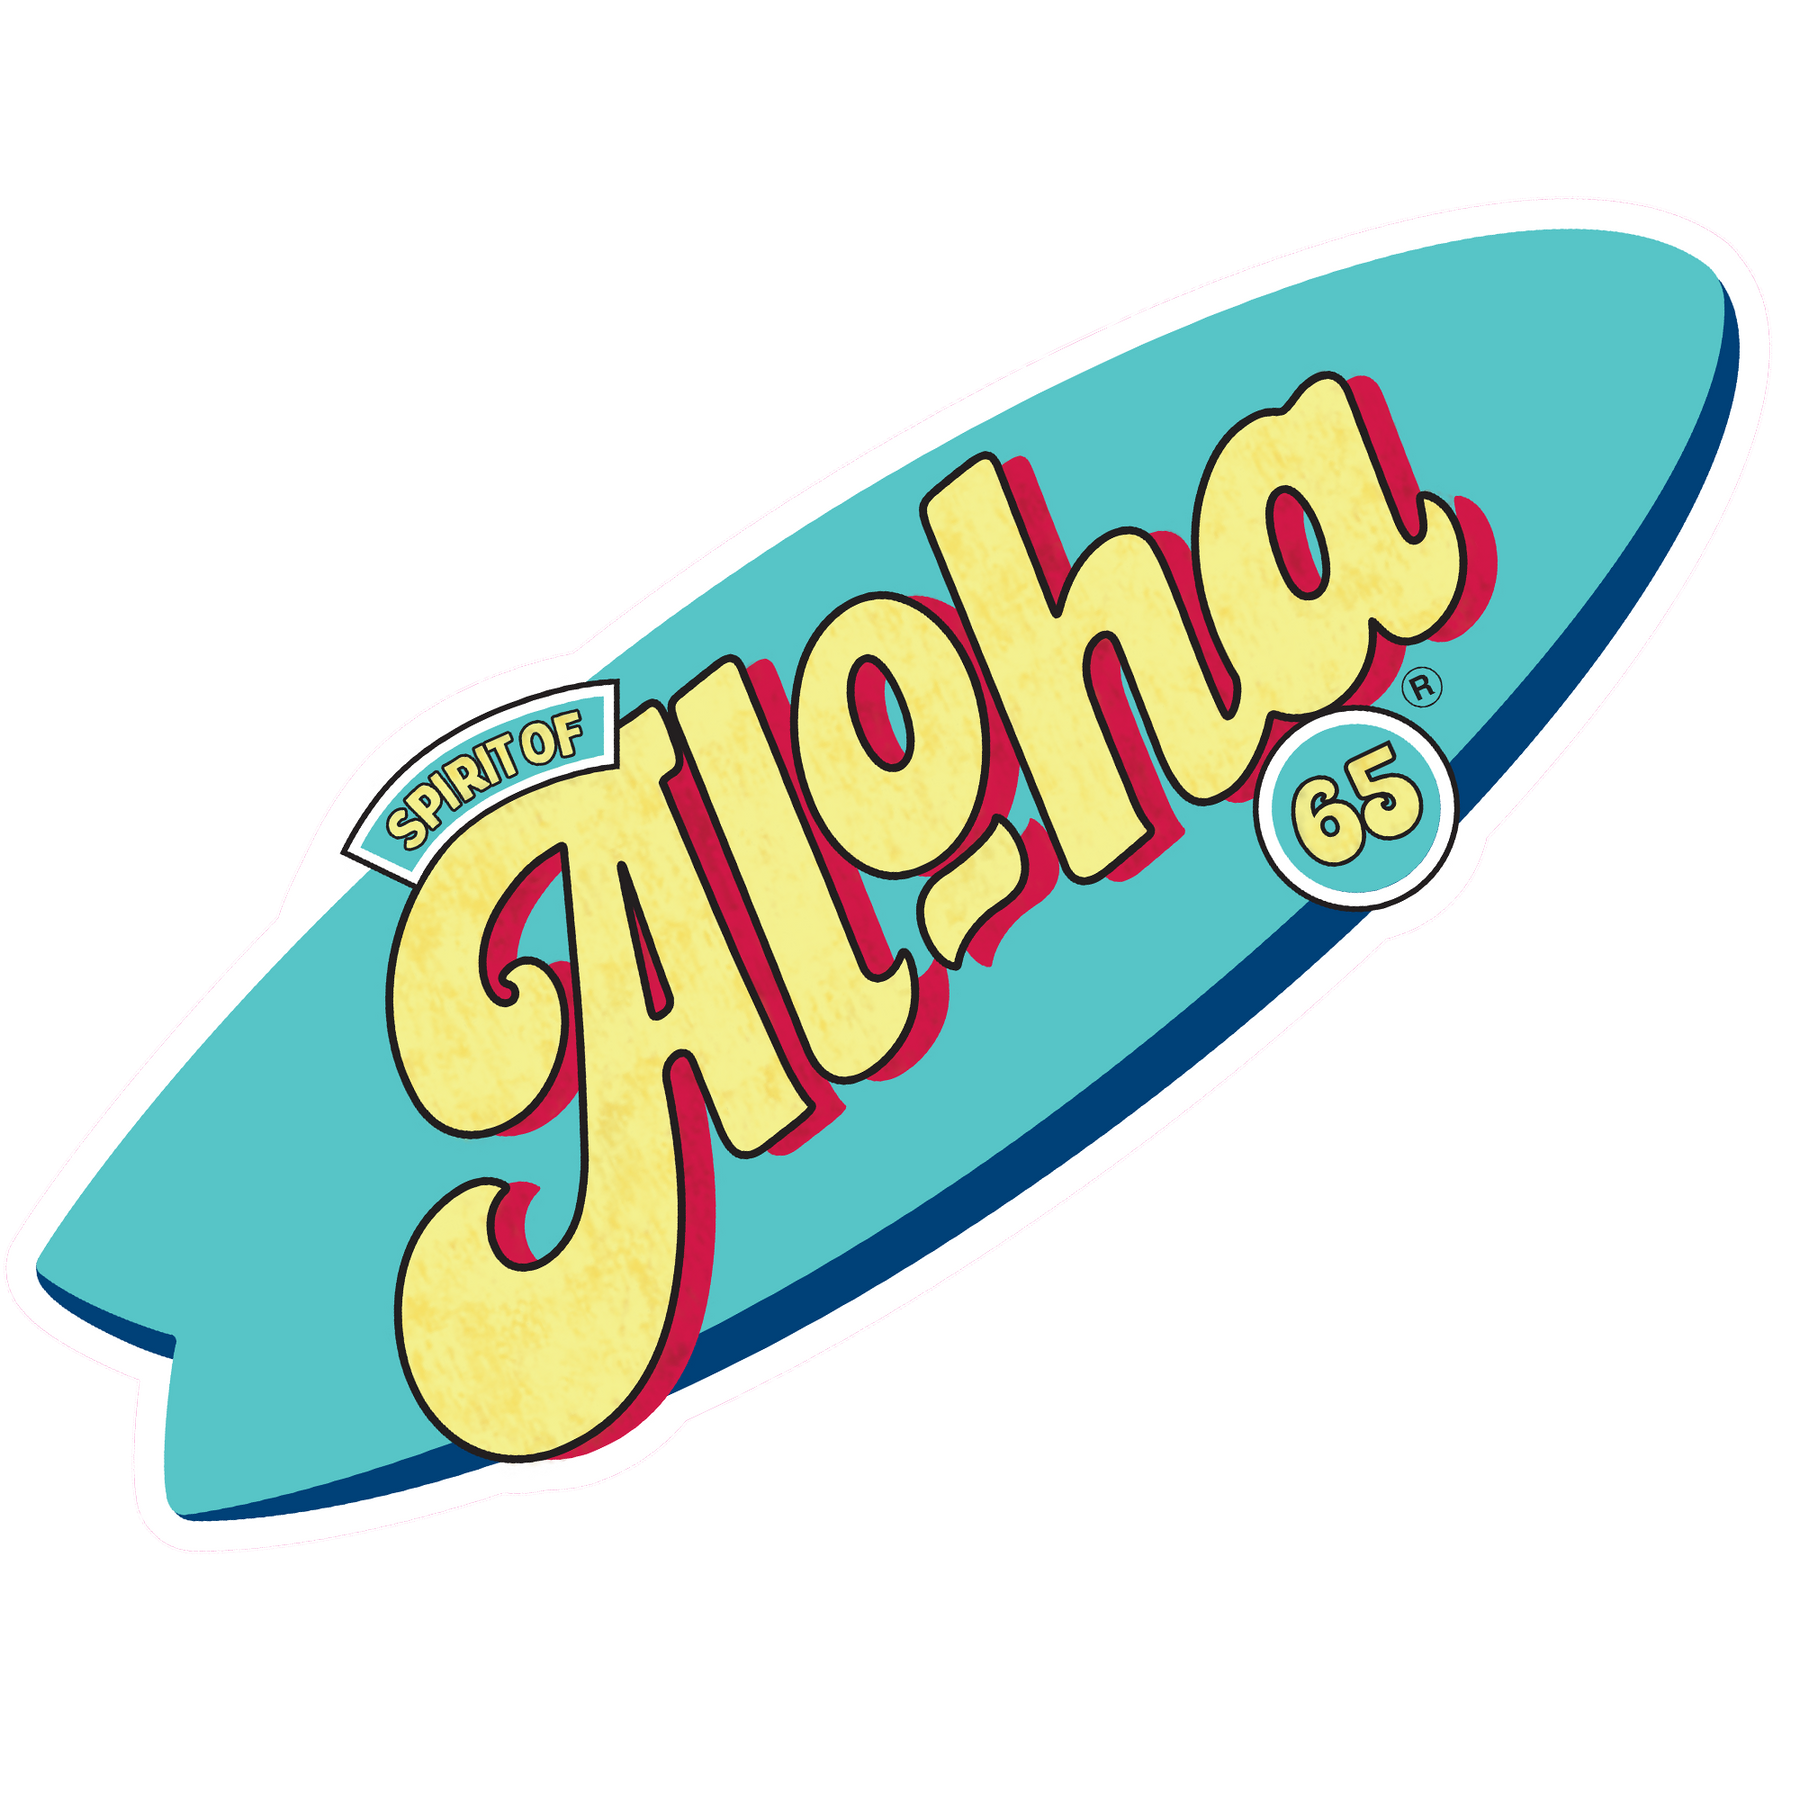 Aloha 65 Large Sticker 40cm x 15cm